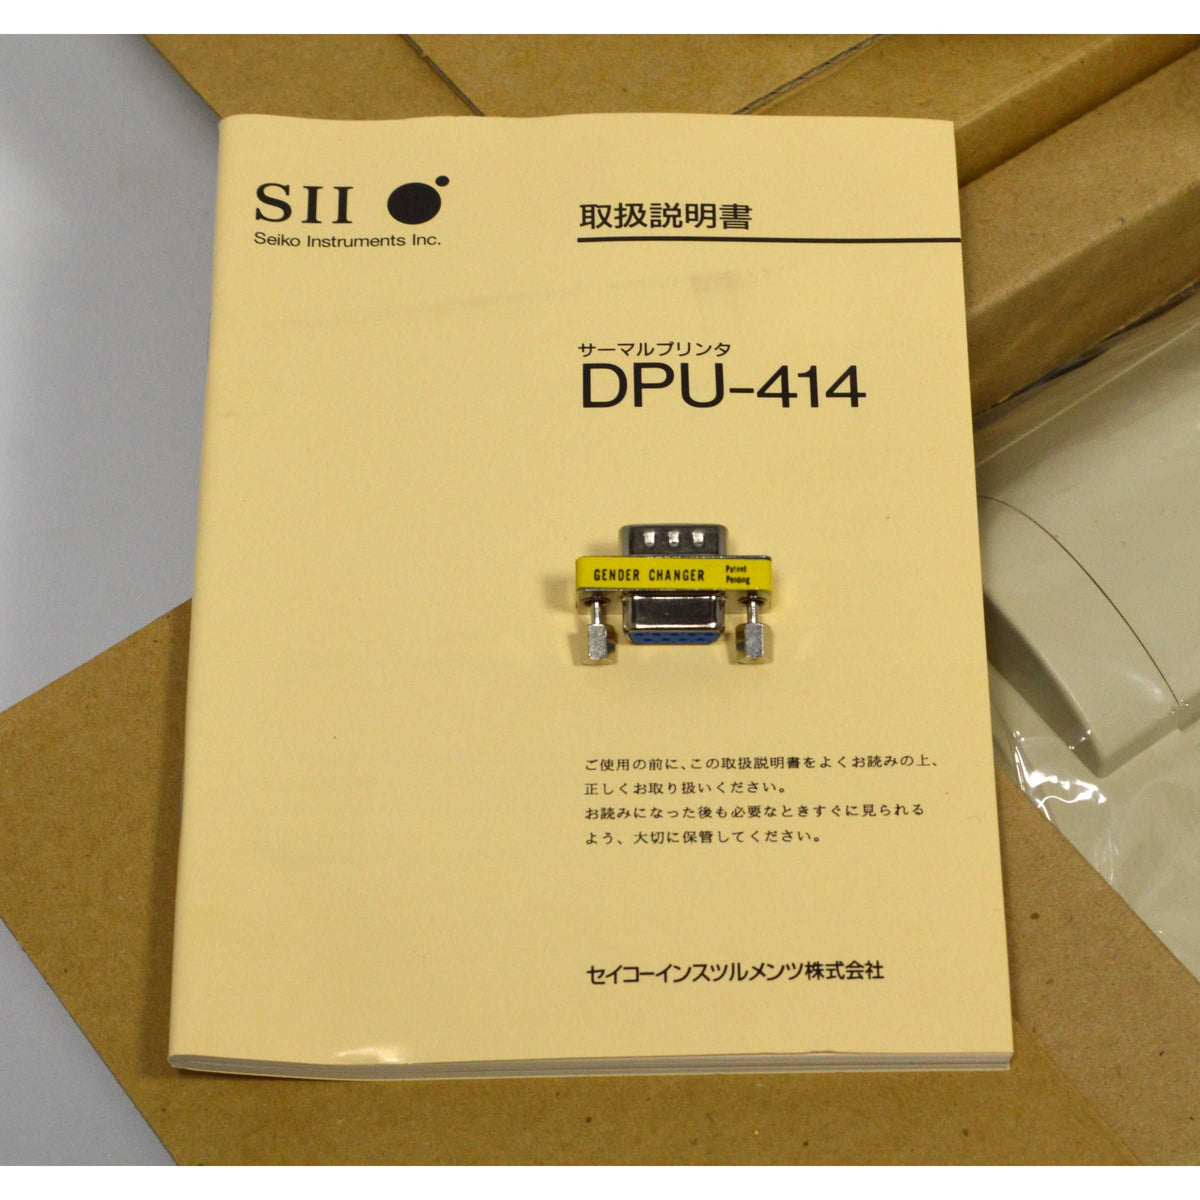 New (Open Box) SEIKO THERMAL PRINTER #DPU-414 +Box of 5-Paper Rolls  NAP-0112-025